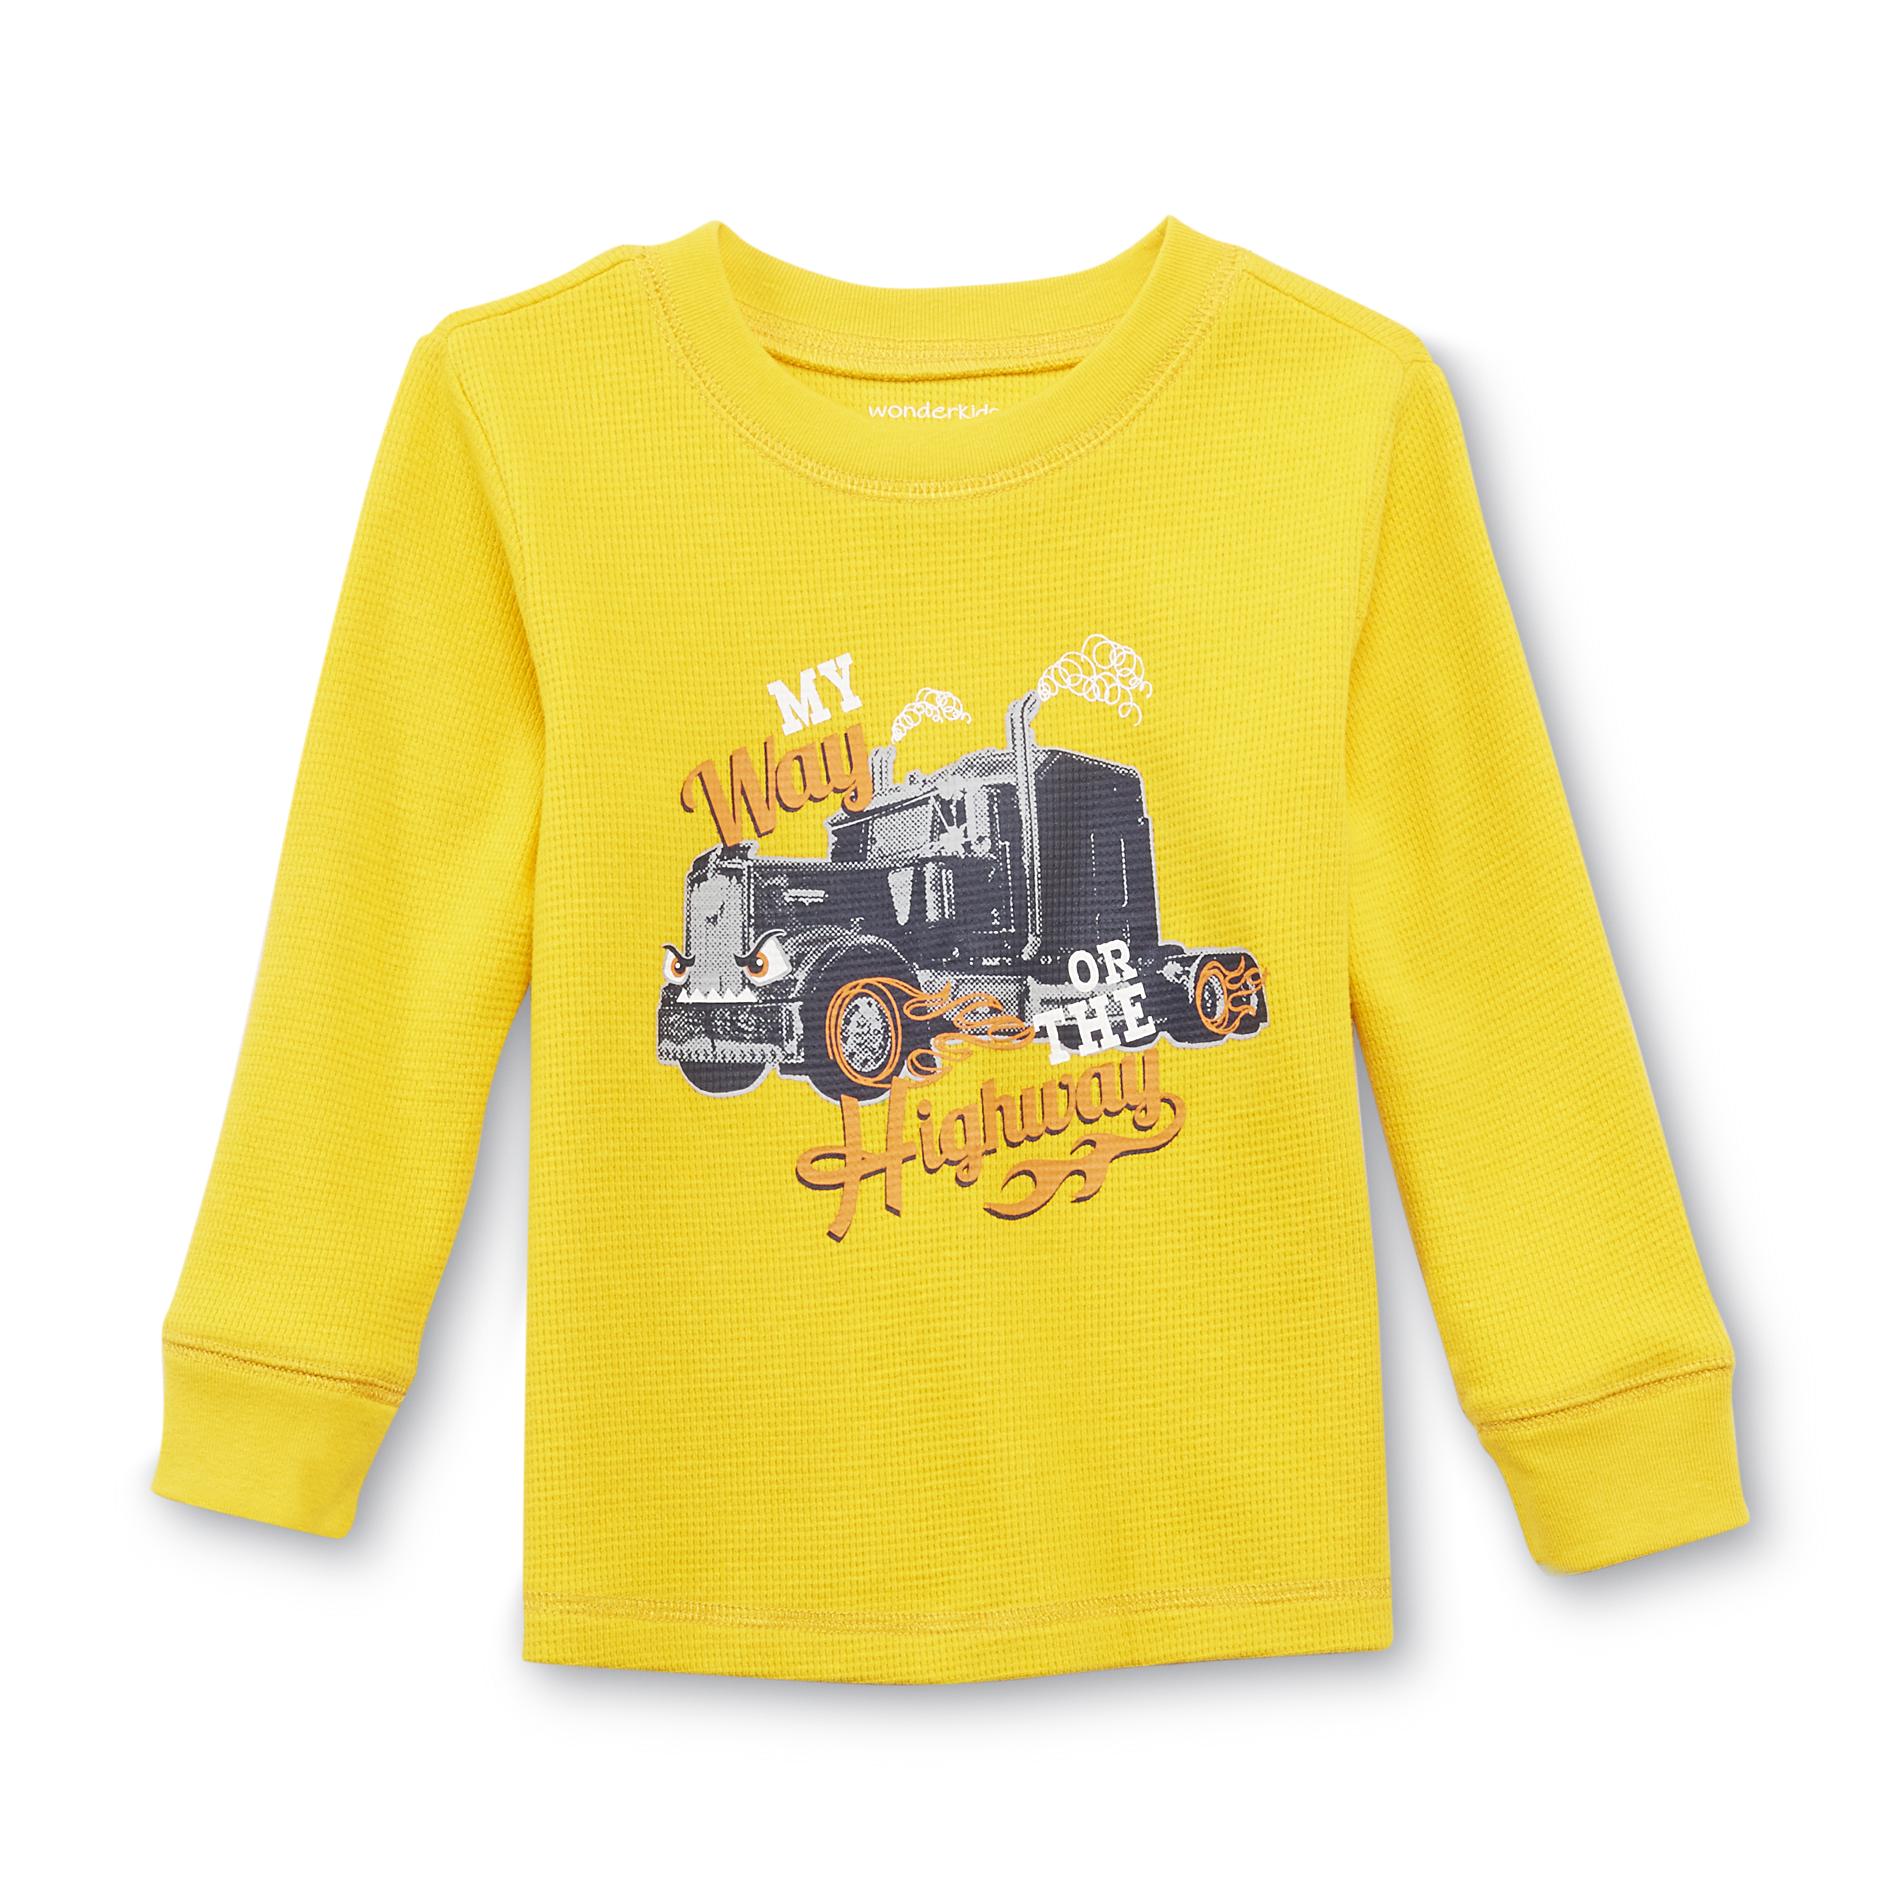 WonderKids Infant & Toddler Boy's Thermal Graphic T-Shirt - Monster Truck